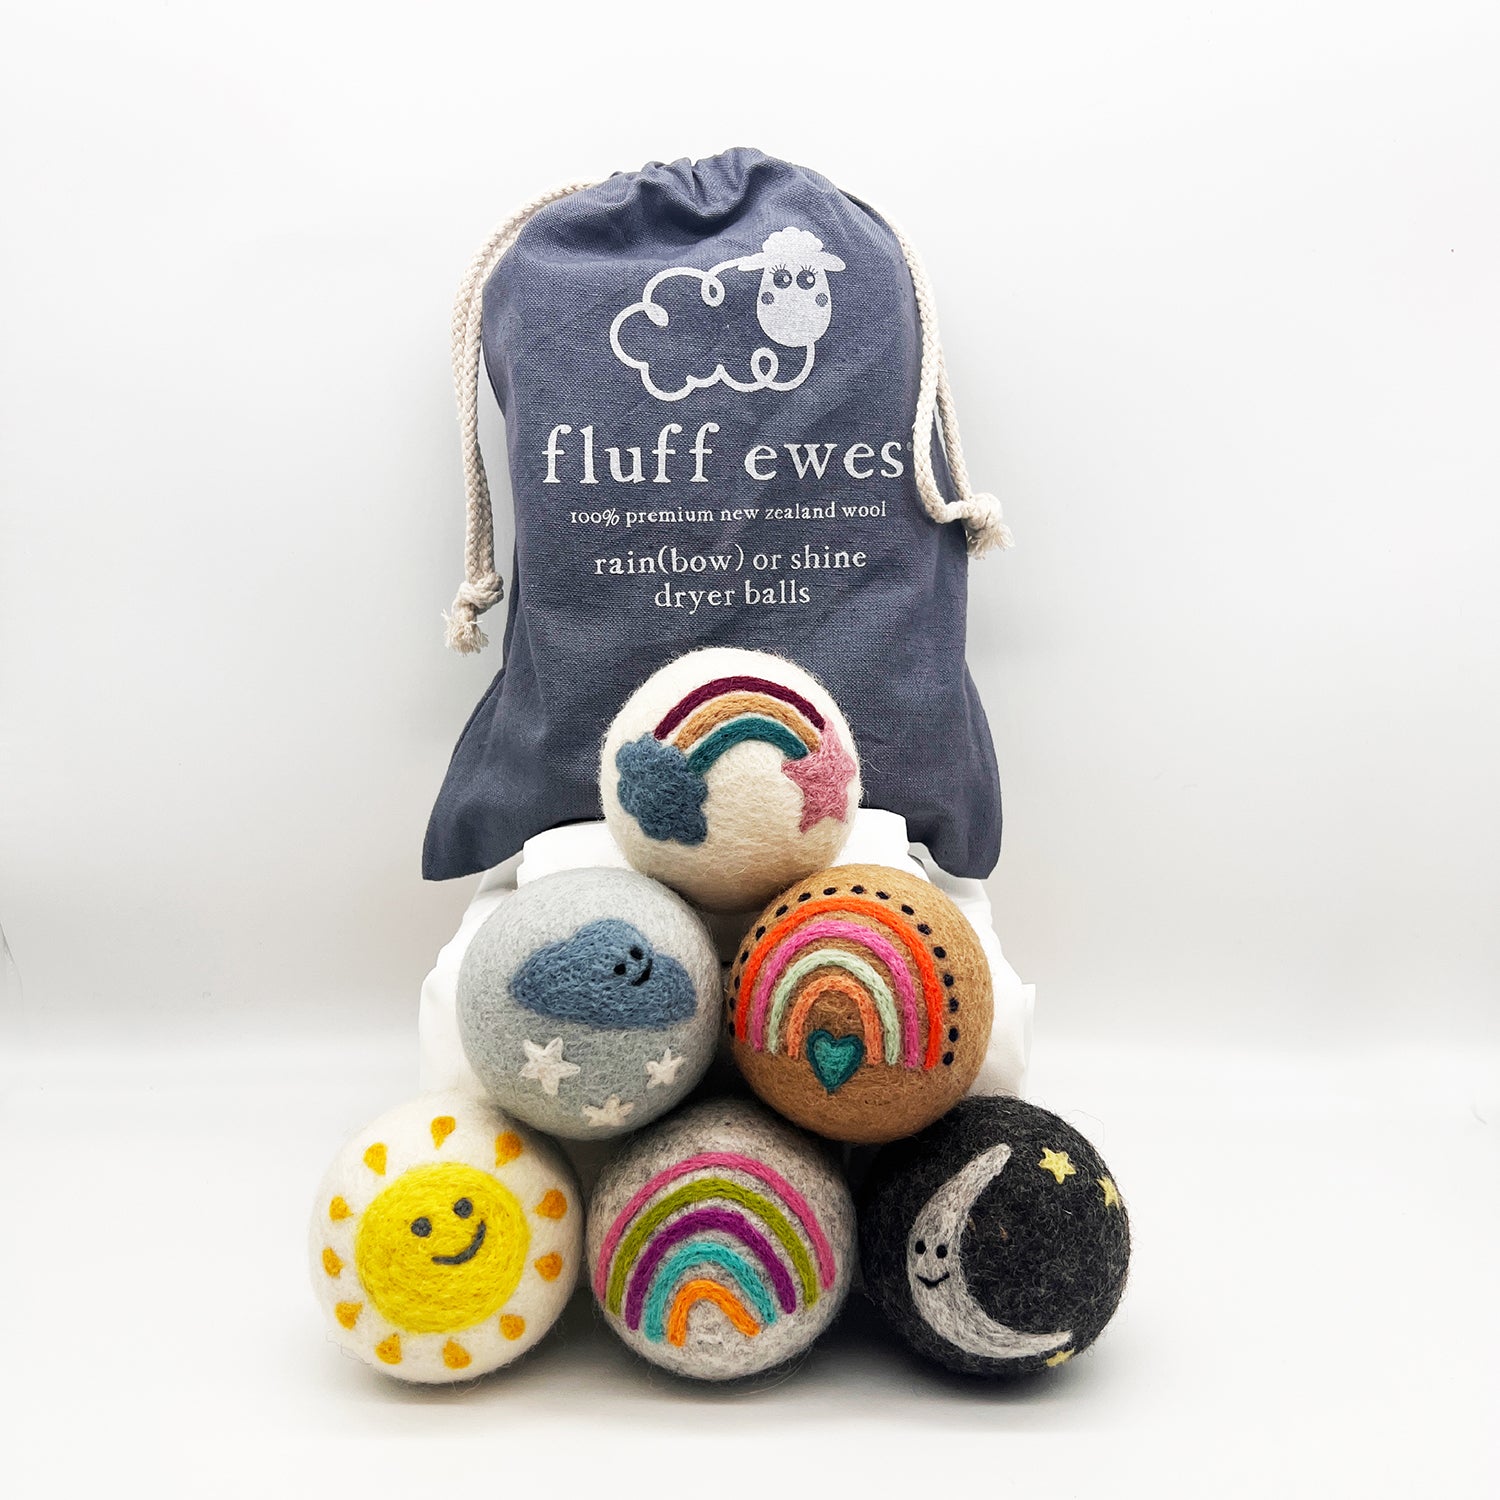 वर्धमान Big Pom Pom multicolor Wool balls for Dresses, art & craft,  decoration, jewellery making pack of 50, size 42 mm dia ( 4 cm ) - Big Pom  Pom multicolor Wool